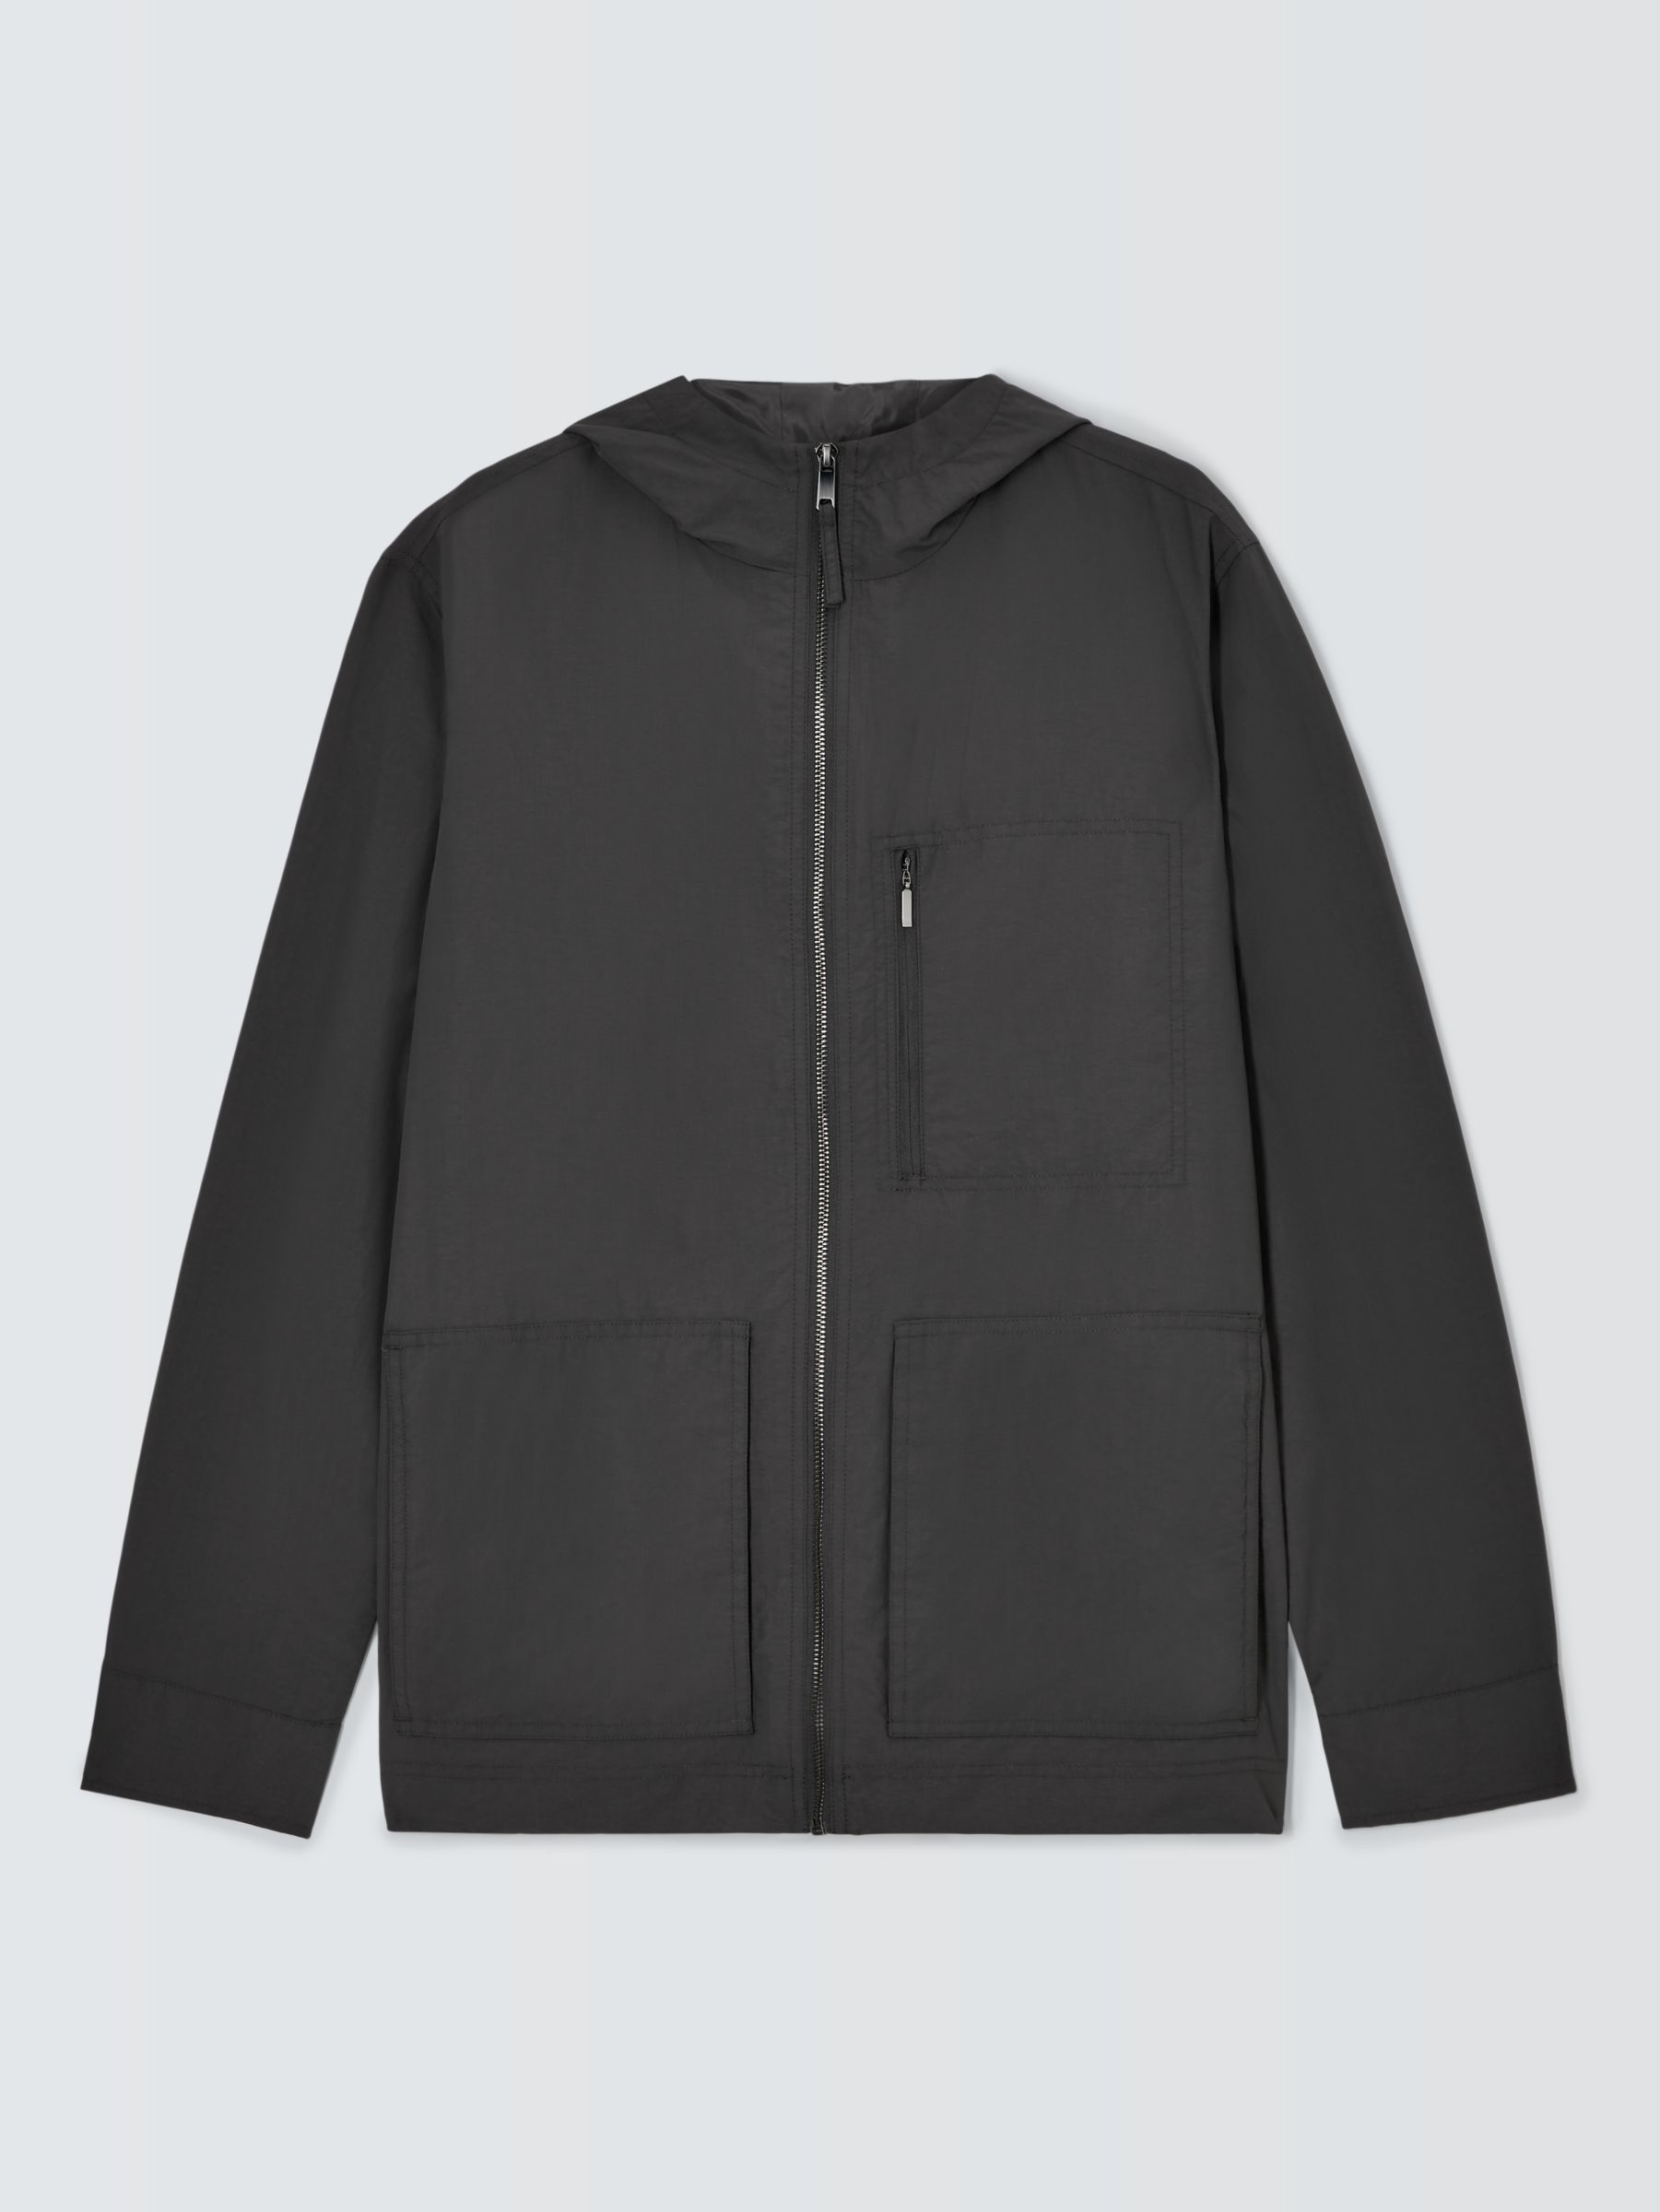 Kin Nylon Showerproof Hooded Jacket, Black, XL